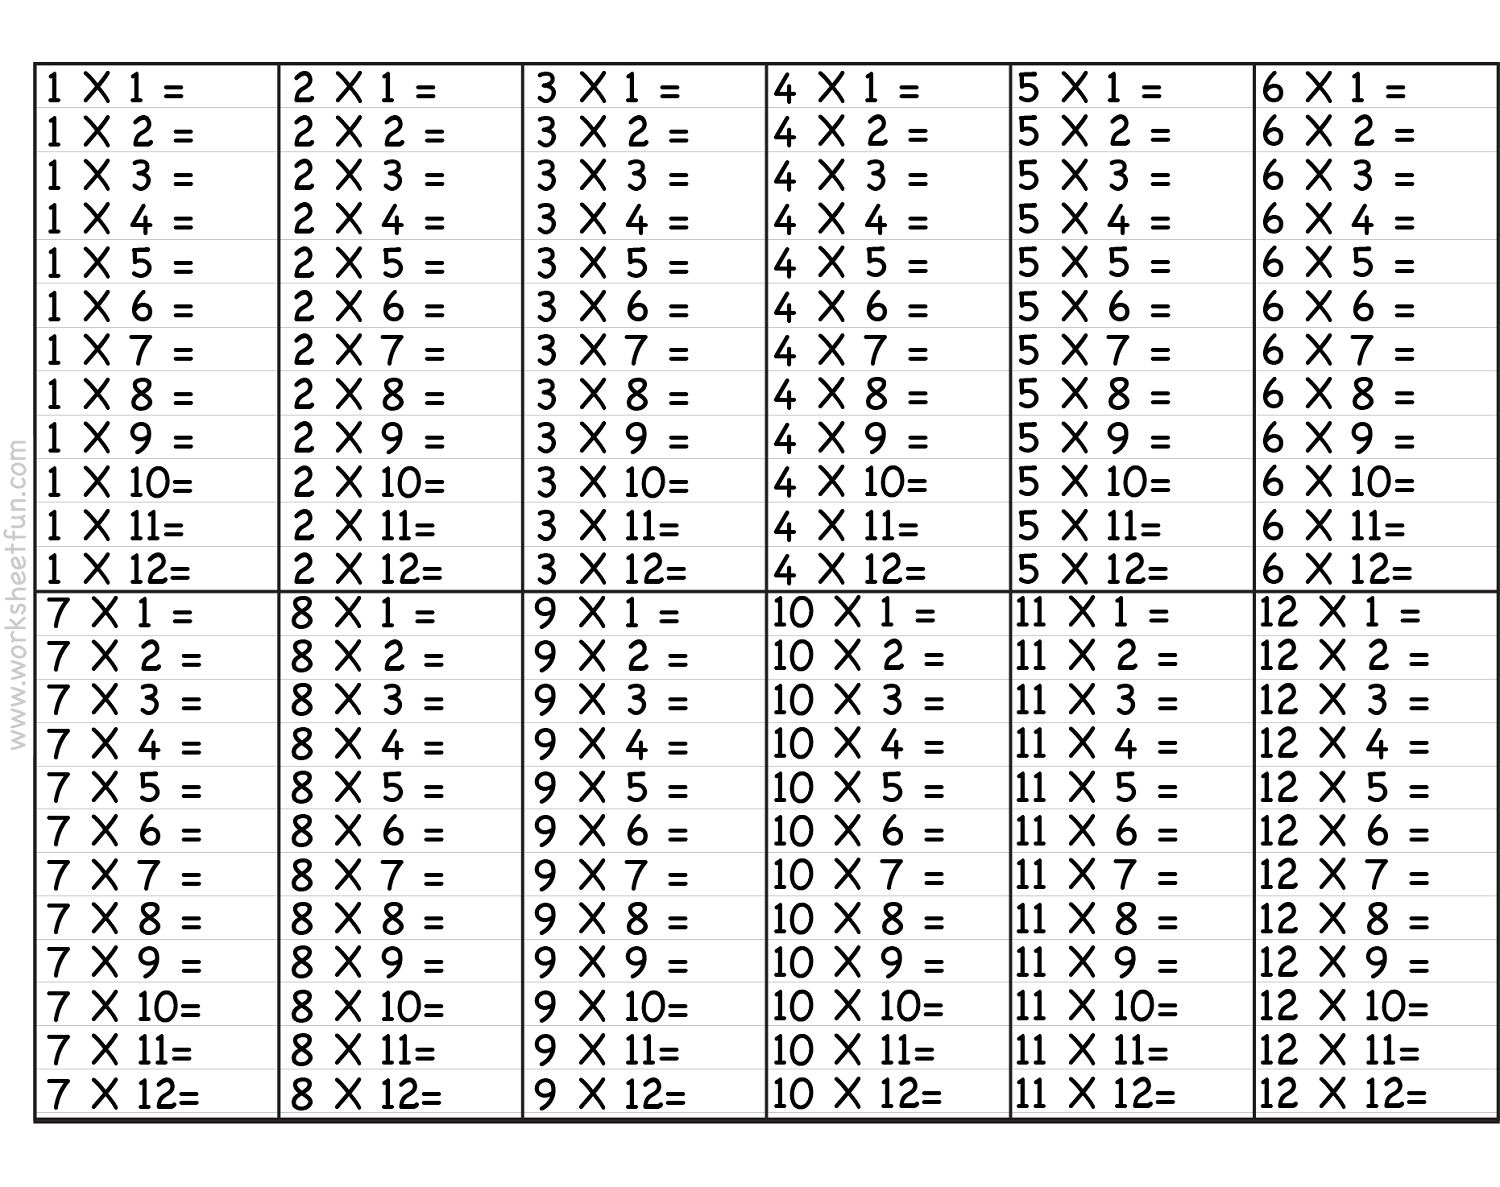 Large Multiplication Table For Children Mathematics Lesson in Large Printable Multiplication Table